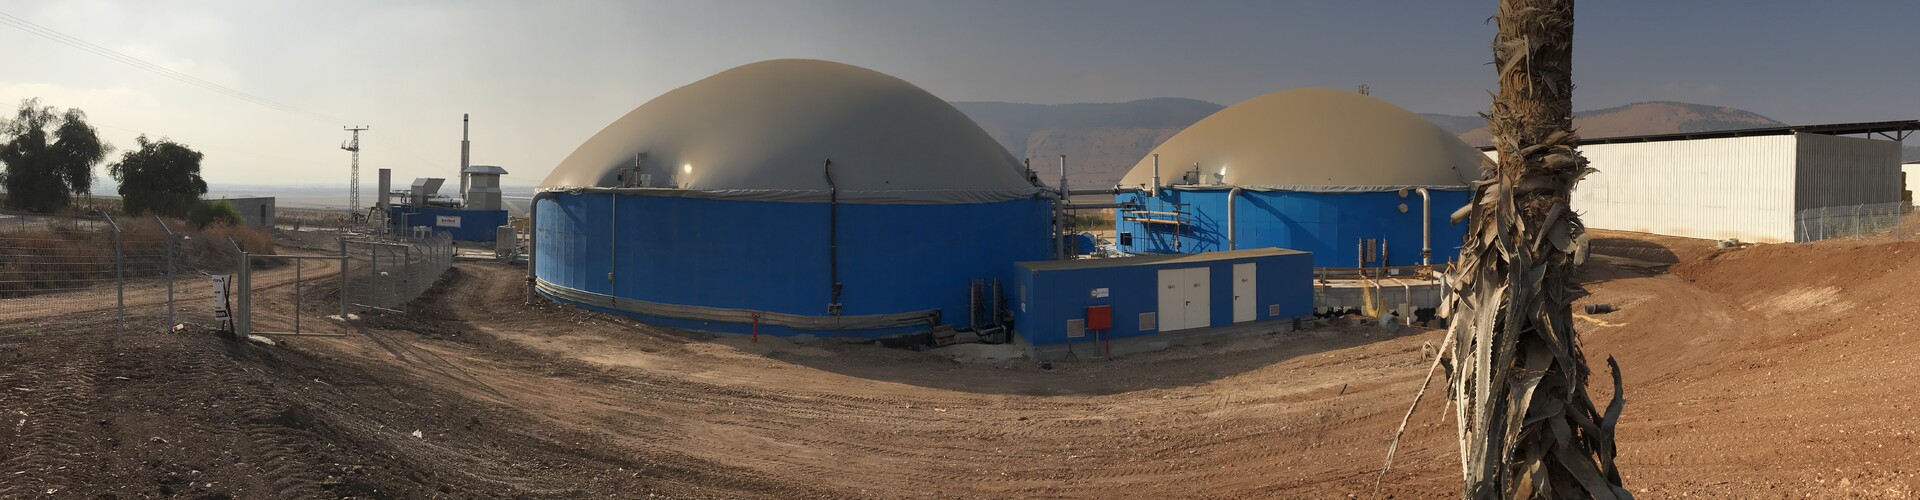 Installation de biogaz Tel Yosef, Israël